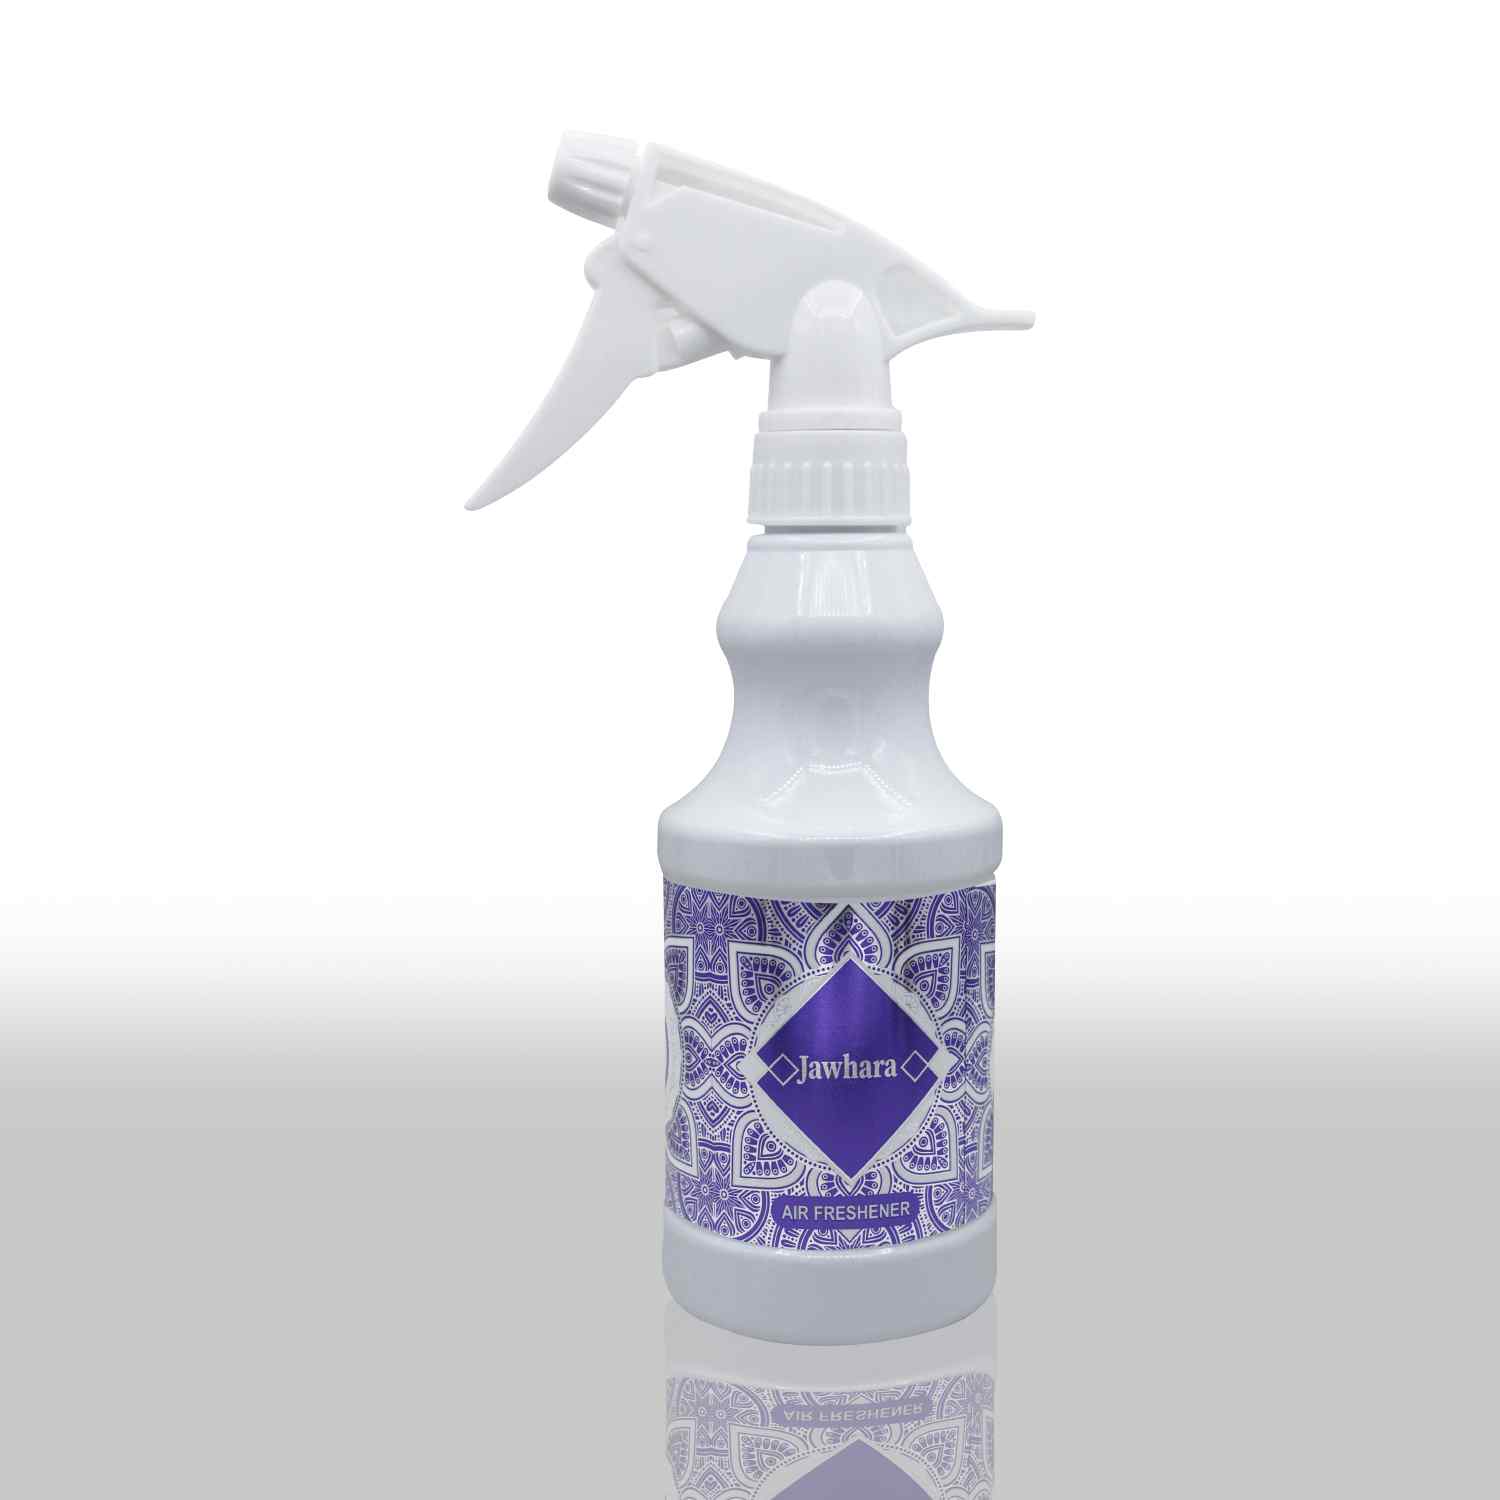 Jawhara Air Freshener 380ml by ard perfumes. Made in UAE